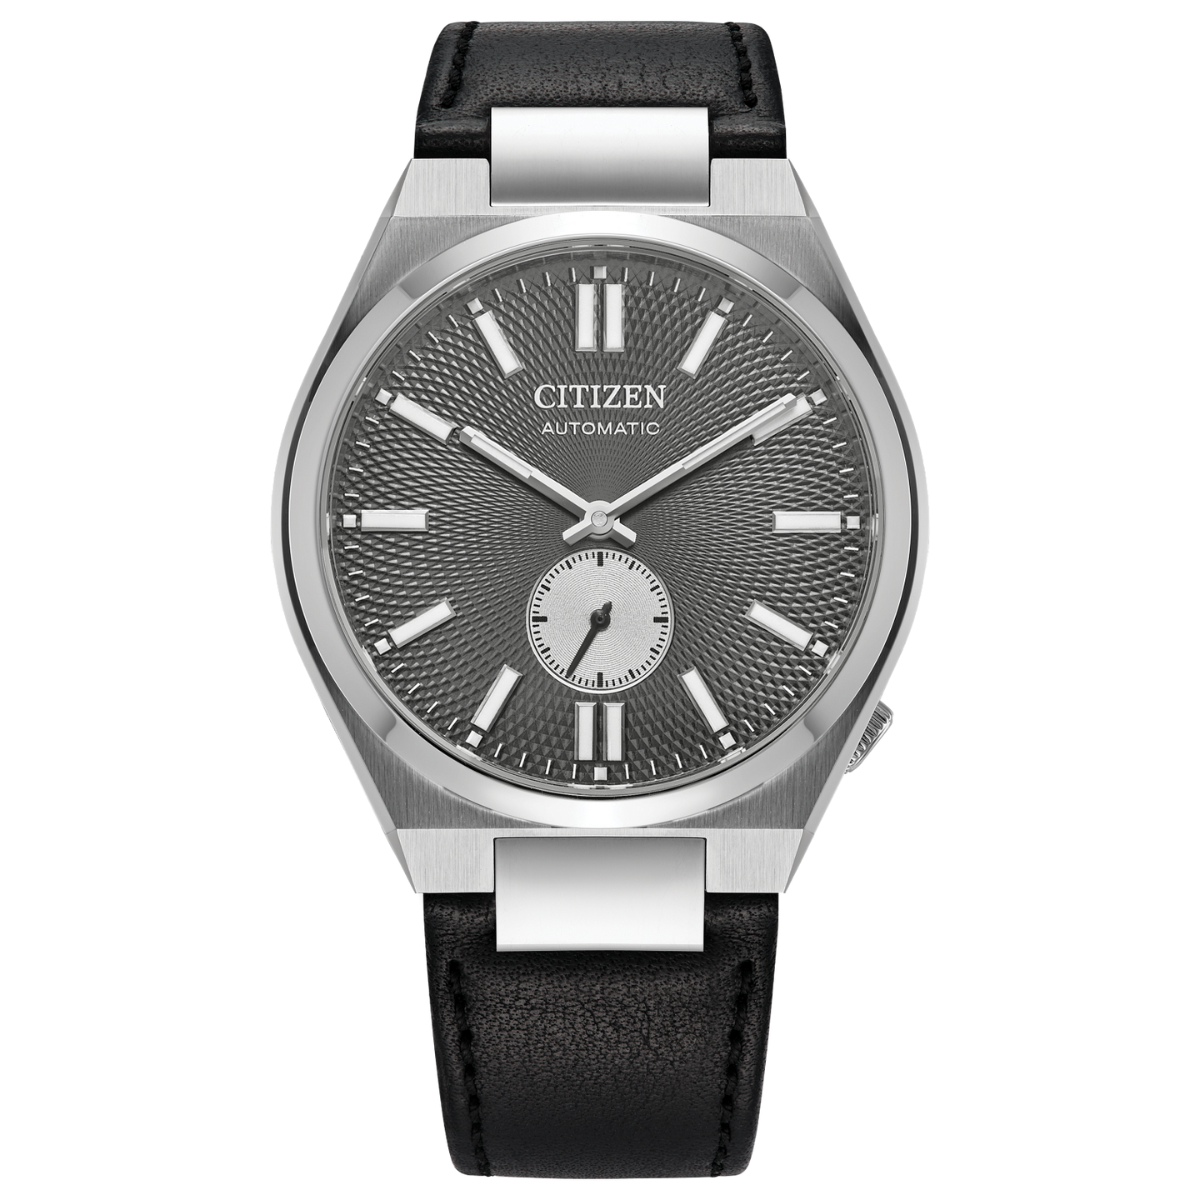 Citizen “TSUYOSA” Small Second Automatic Men's Watch NK5010-01H